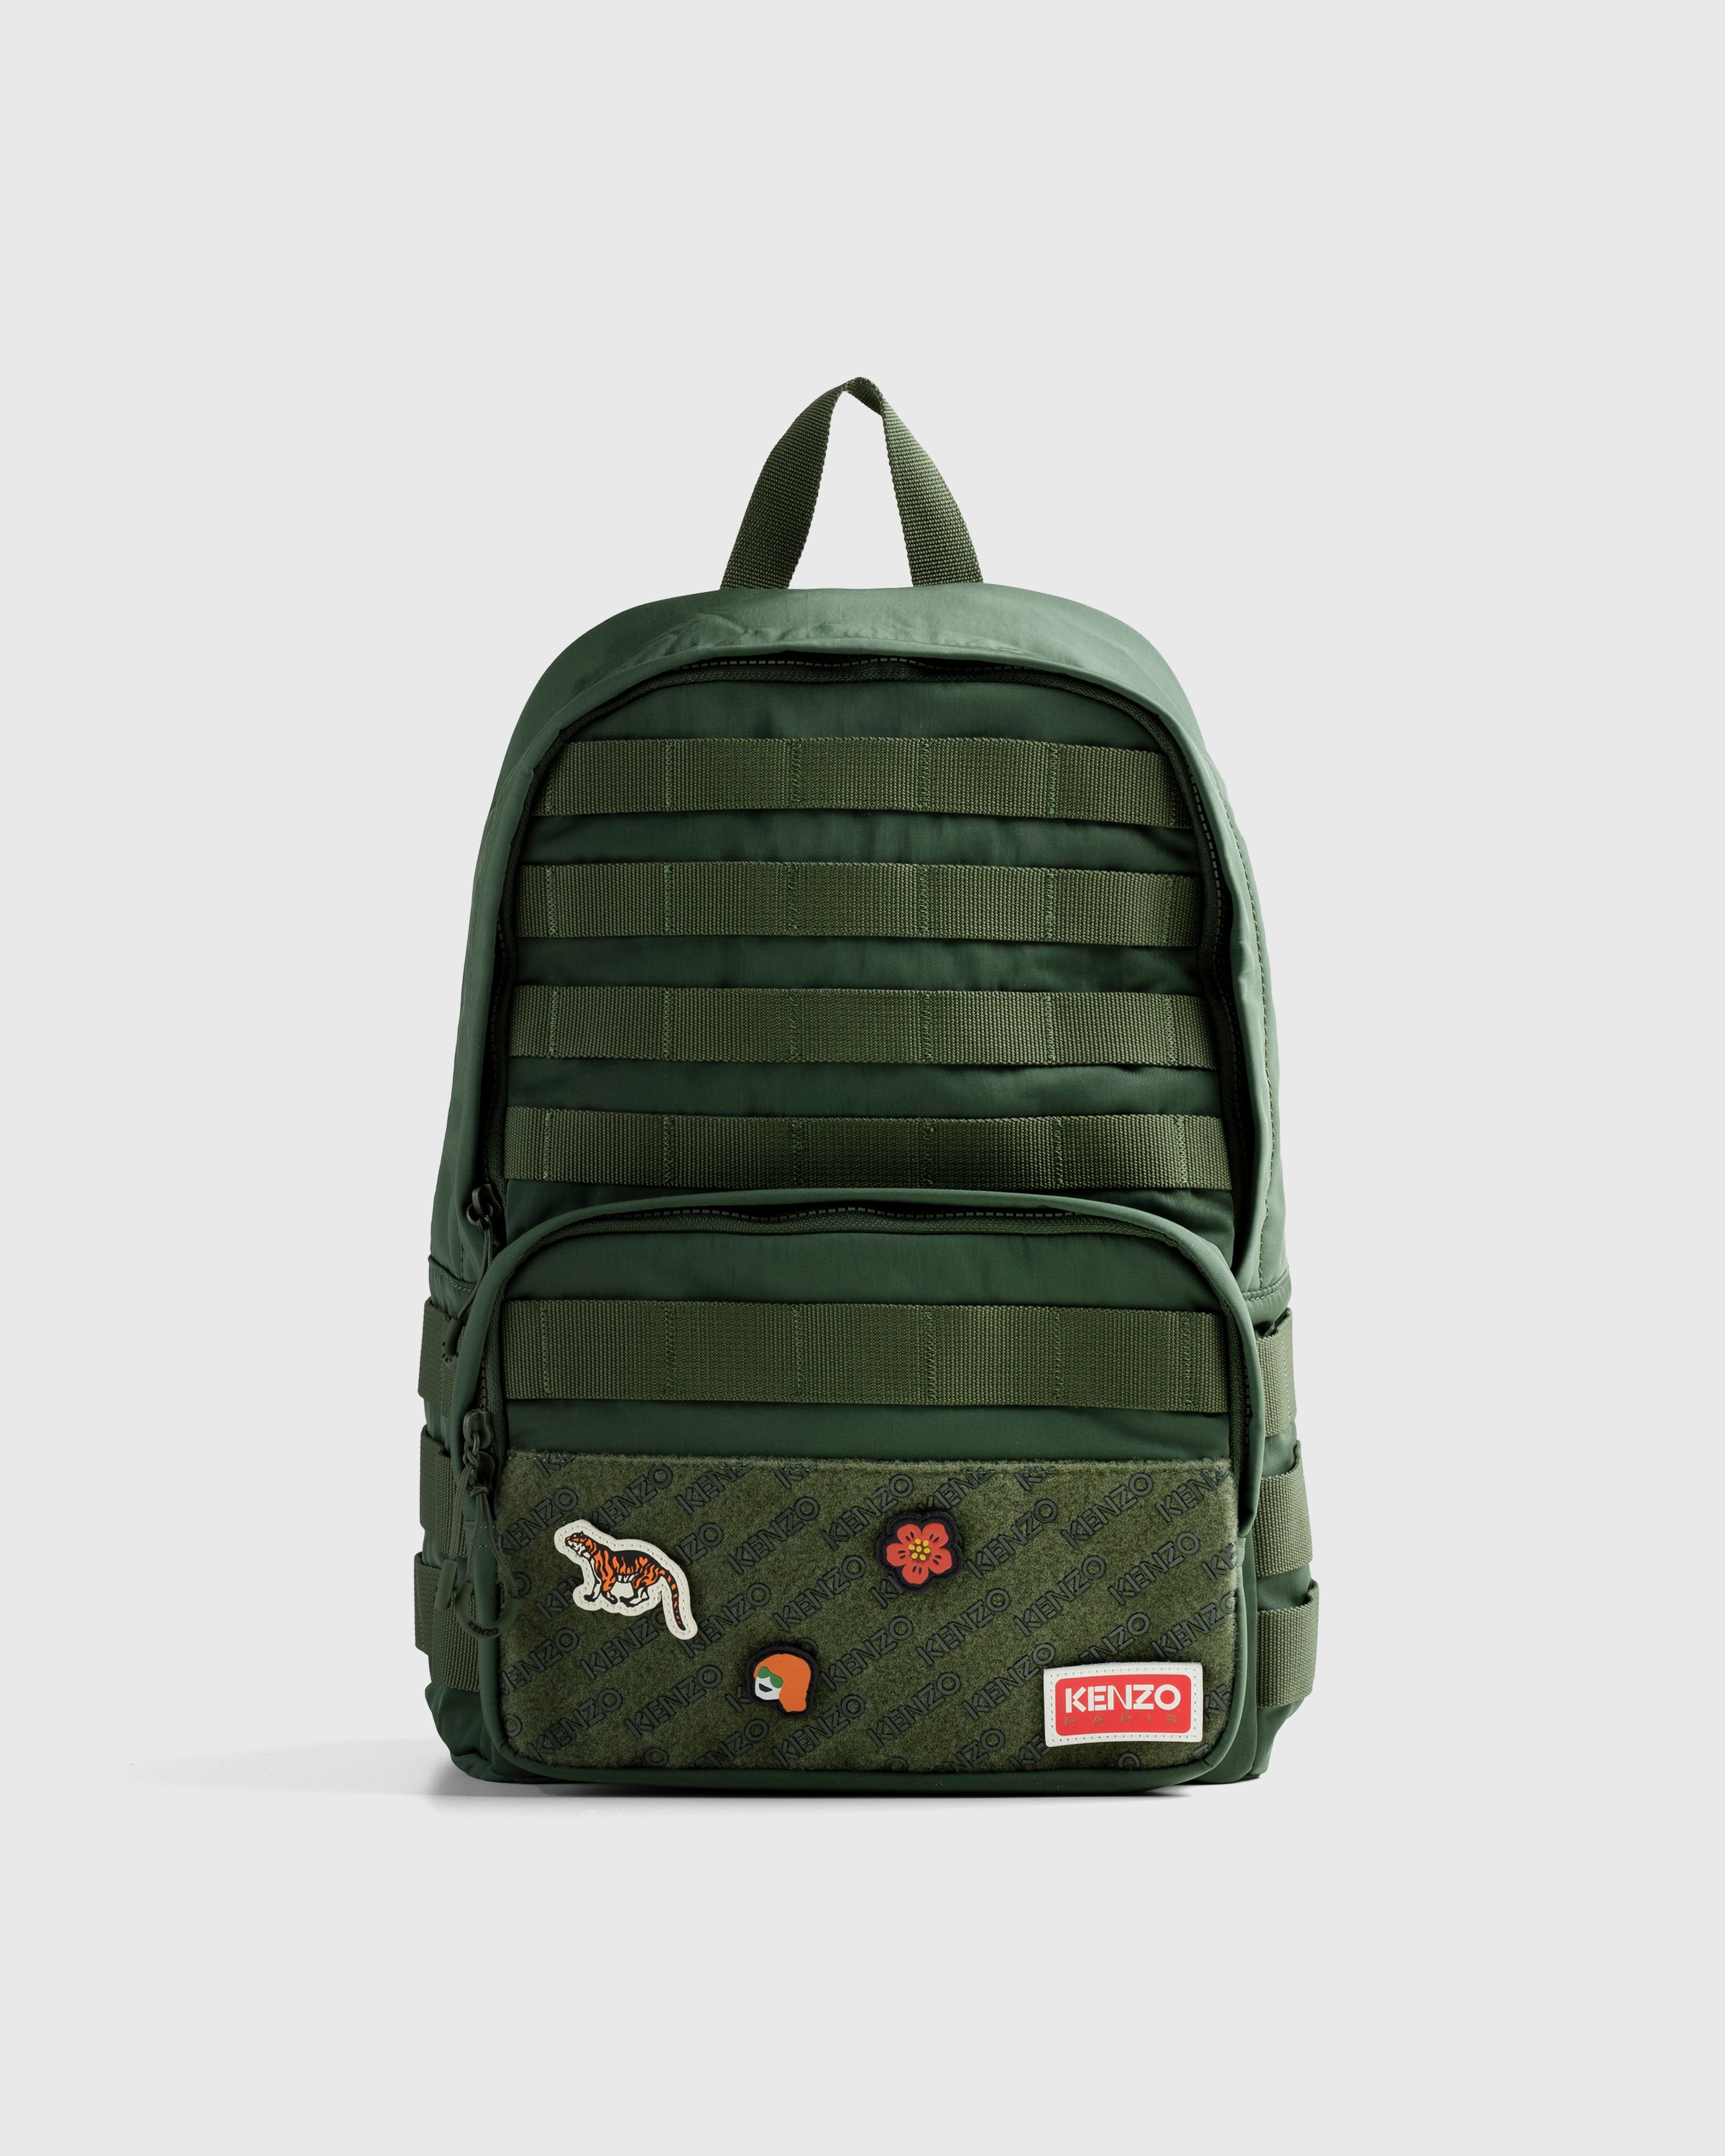 Kenzo - Jungle Backpack Dark Khaki - Accessories - Green - Image 1